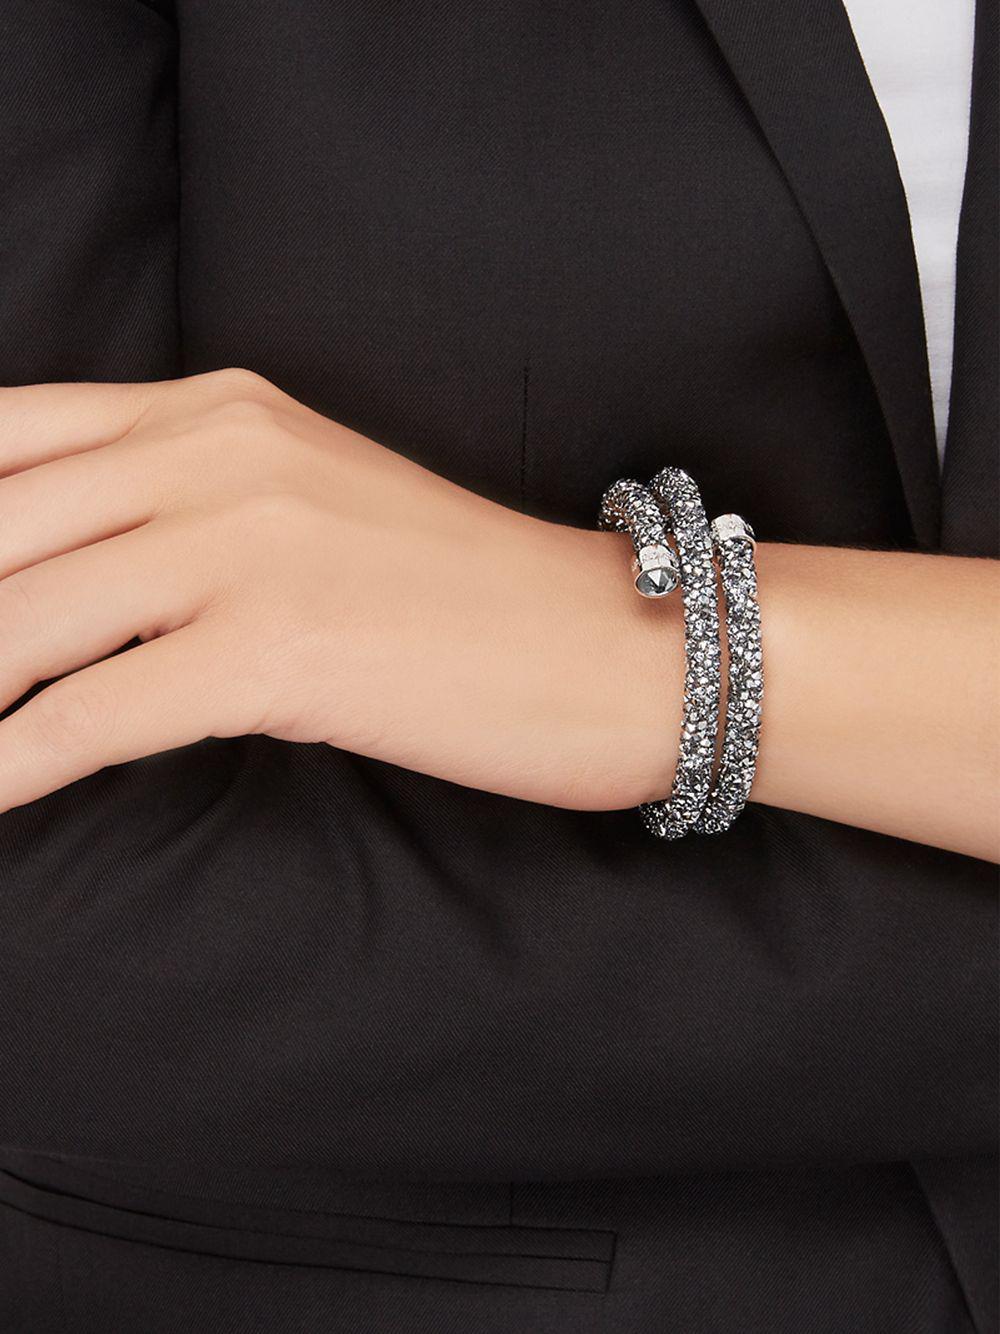 Swarovski Crystaldust Bangle Bracelet in Silver (Gray) - Lyst